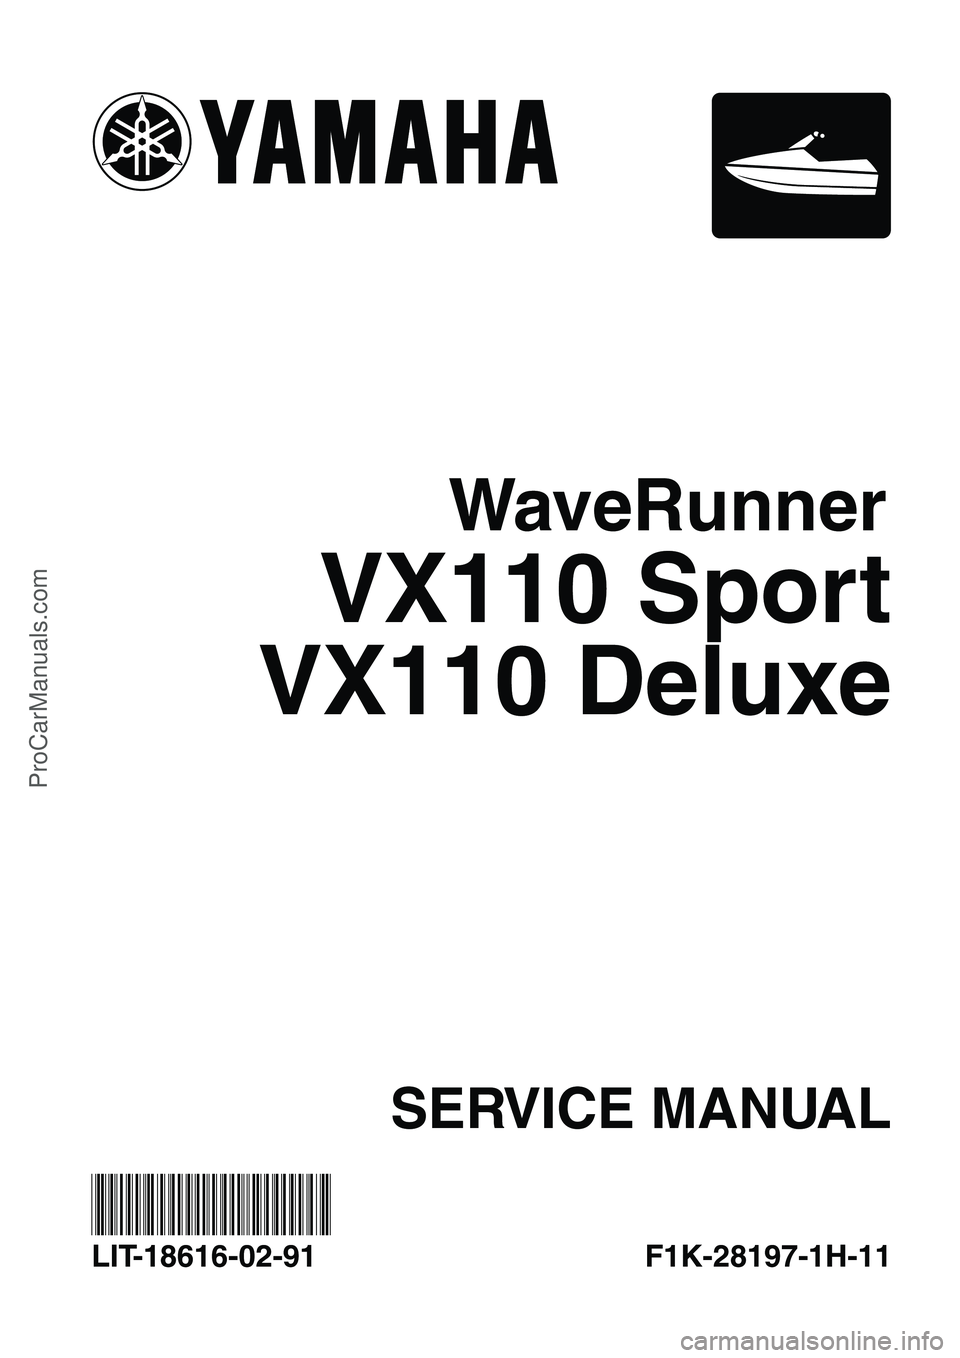 YAMAHA VX110 2005  Service Manual SERVICE MANUAL
VX110 Sport
WaveRunner
F1K-28197-1H-11 LIT-18616-02-91
*LIT186160291*
VX110 Deluxe
ProCarManuals.com 